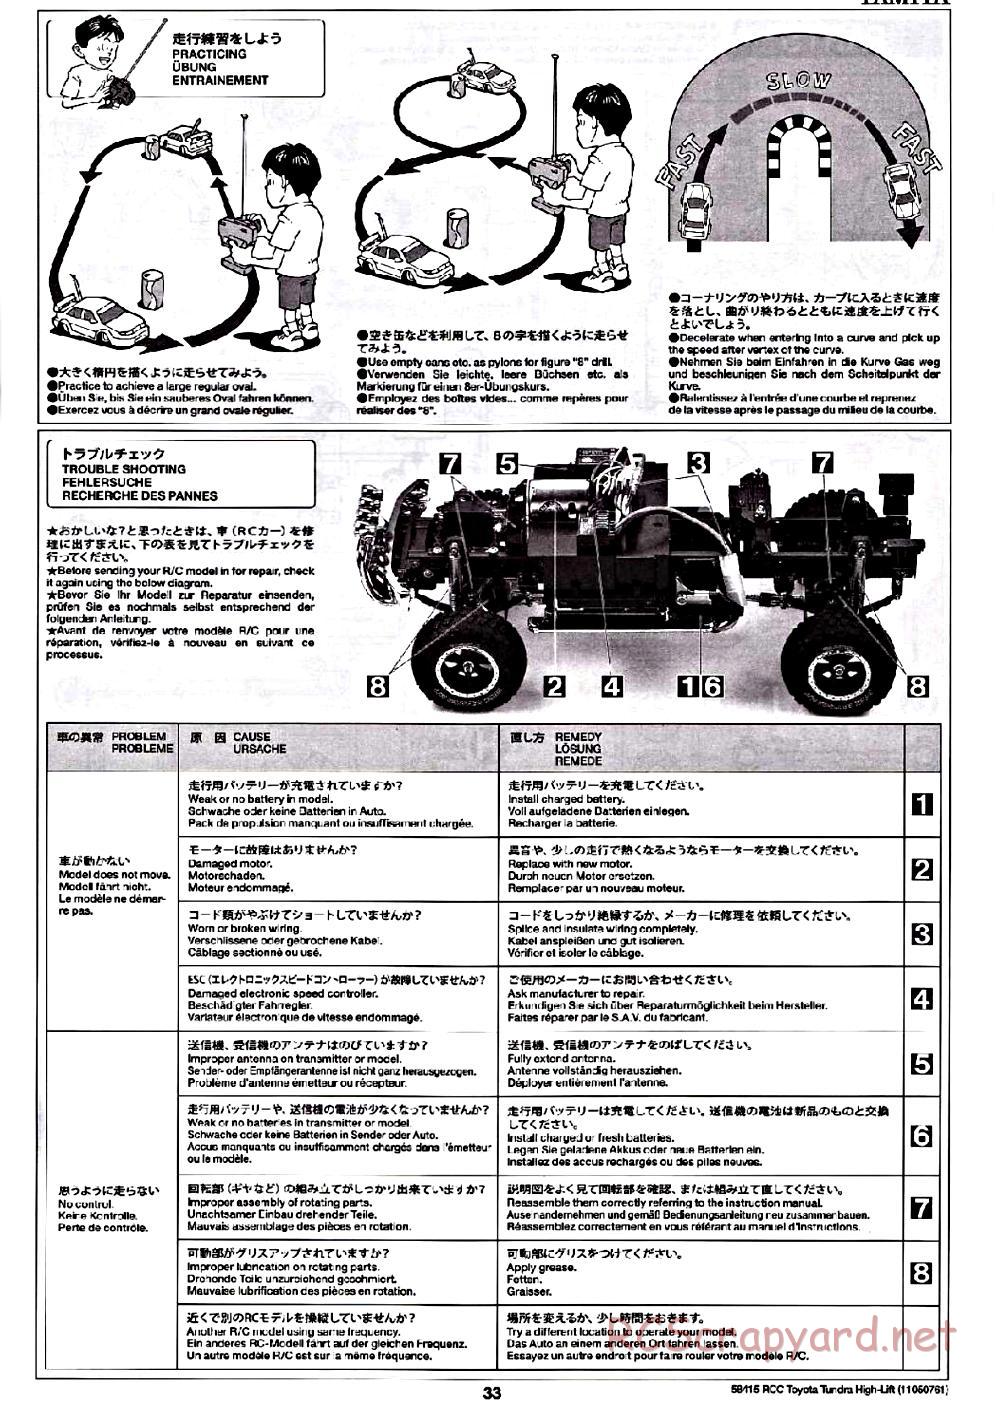 Tamiya - Toyota Tundra High-Lift Chassis - Manual - Page 33